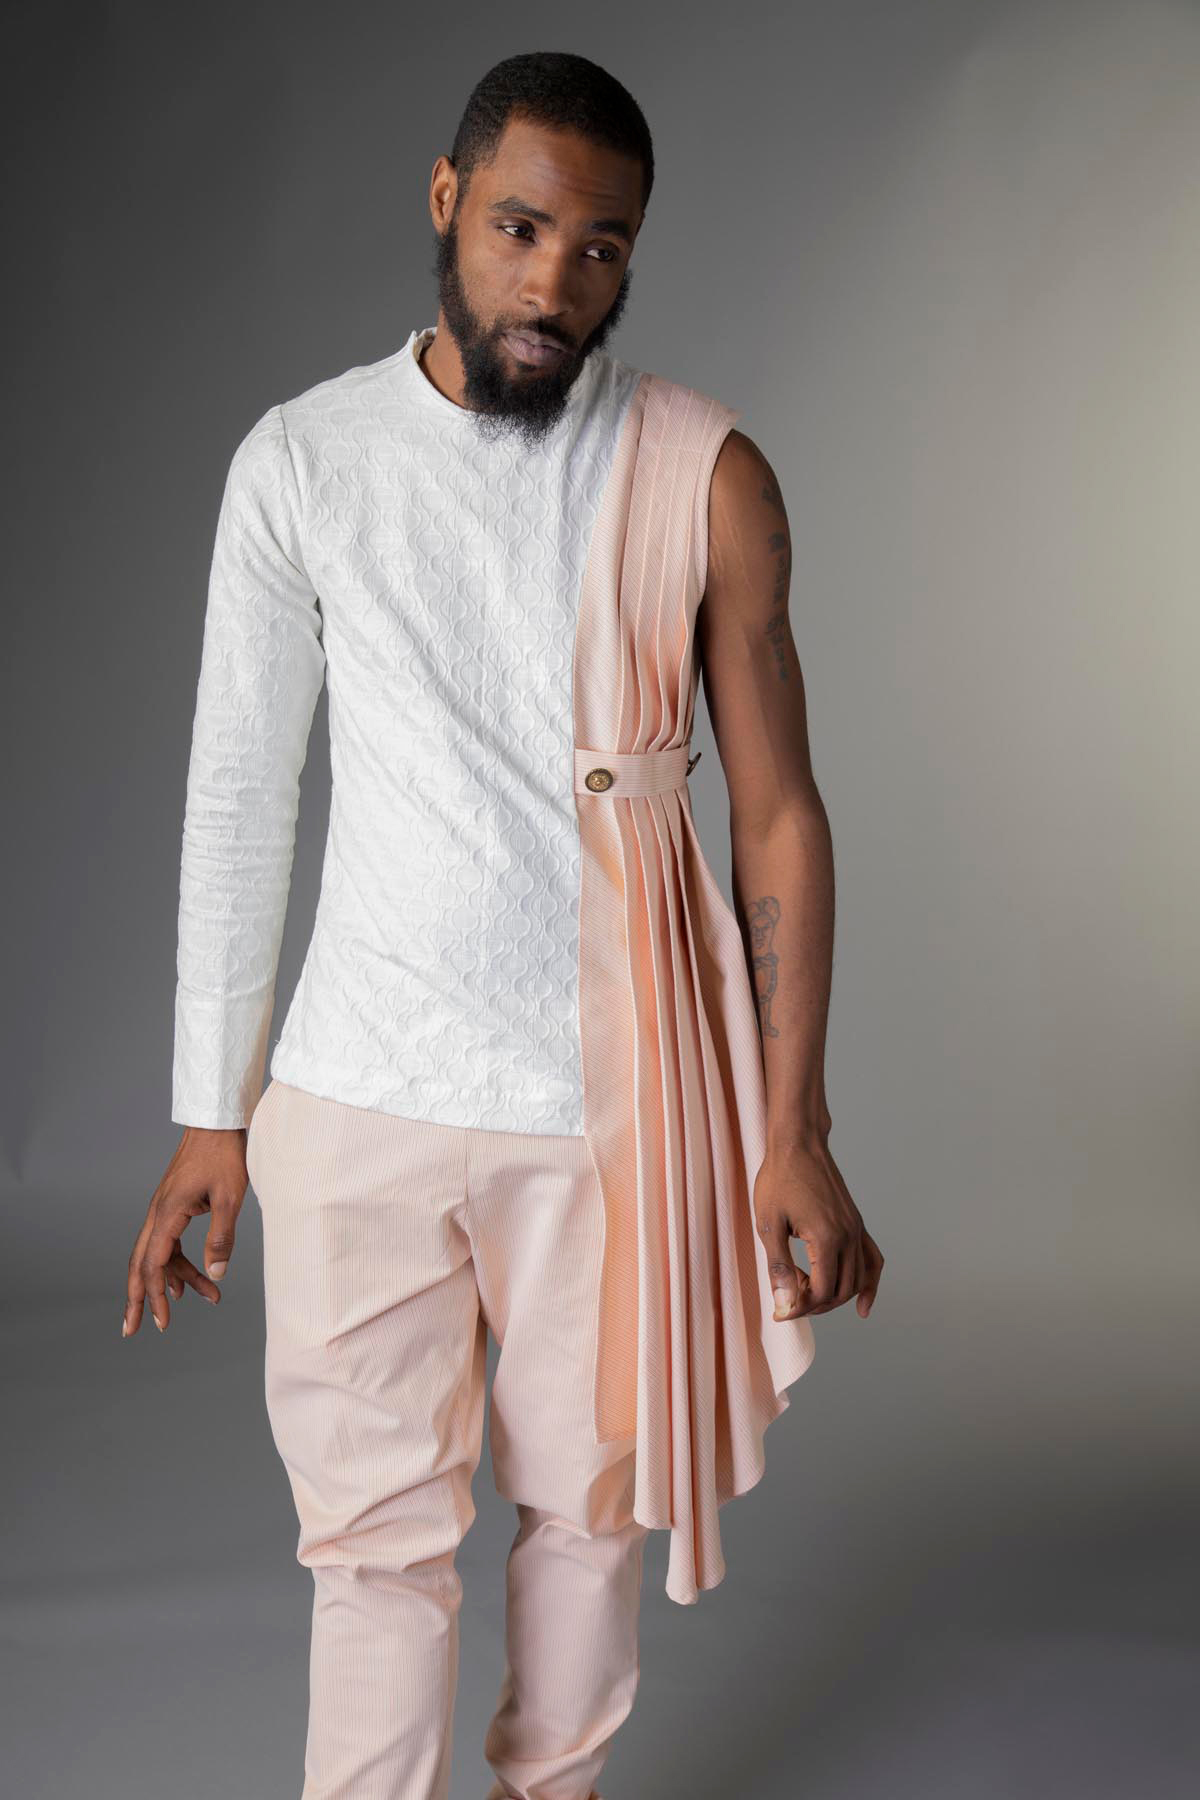 Male models a man’s avant-garde suit with asymmetric drape and pants.